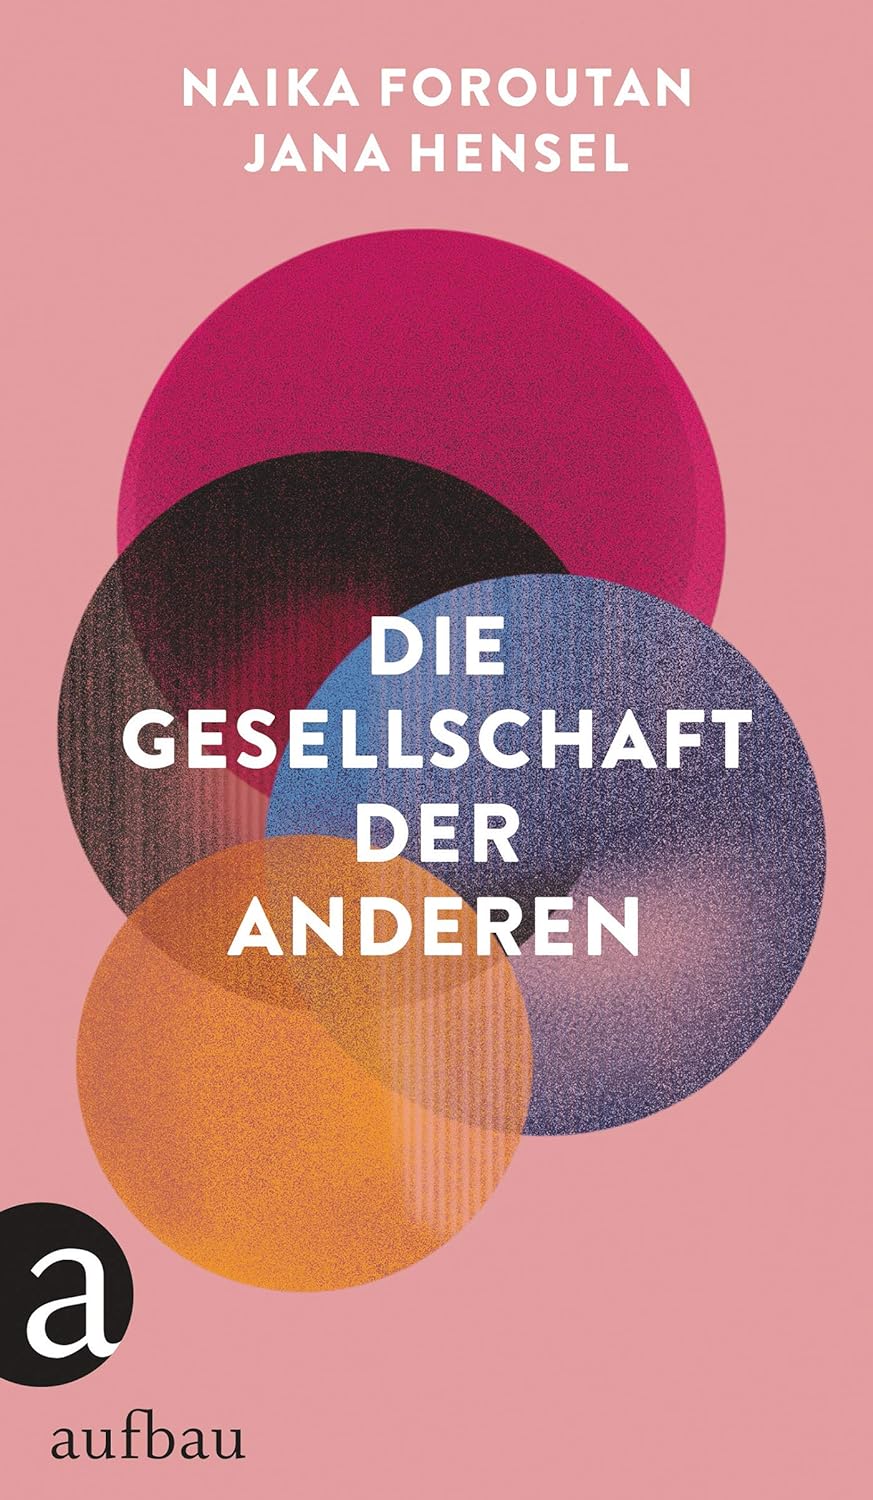 Naika Foroutan, Jana Hensel: Die Gesellschaft der Anderen (German language, 2020)